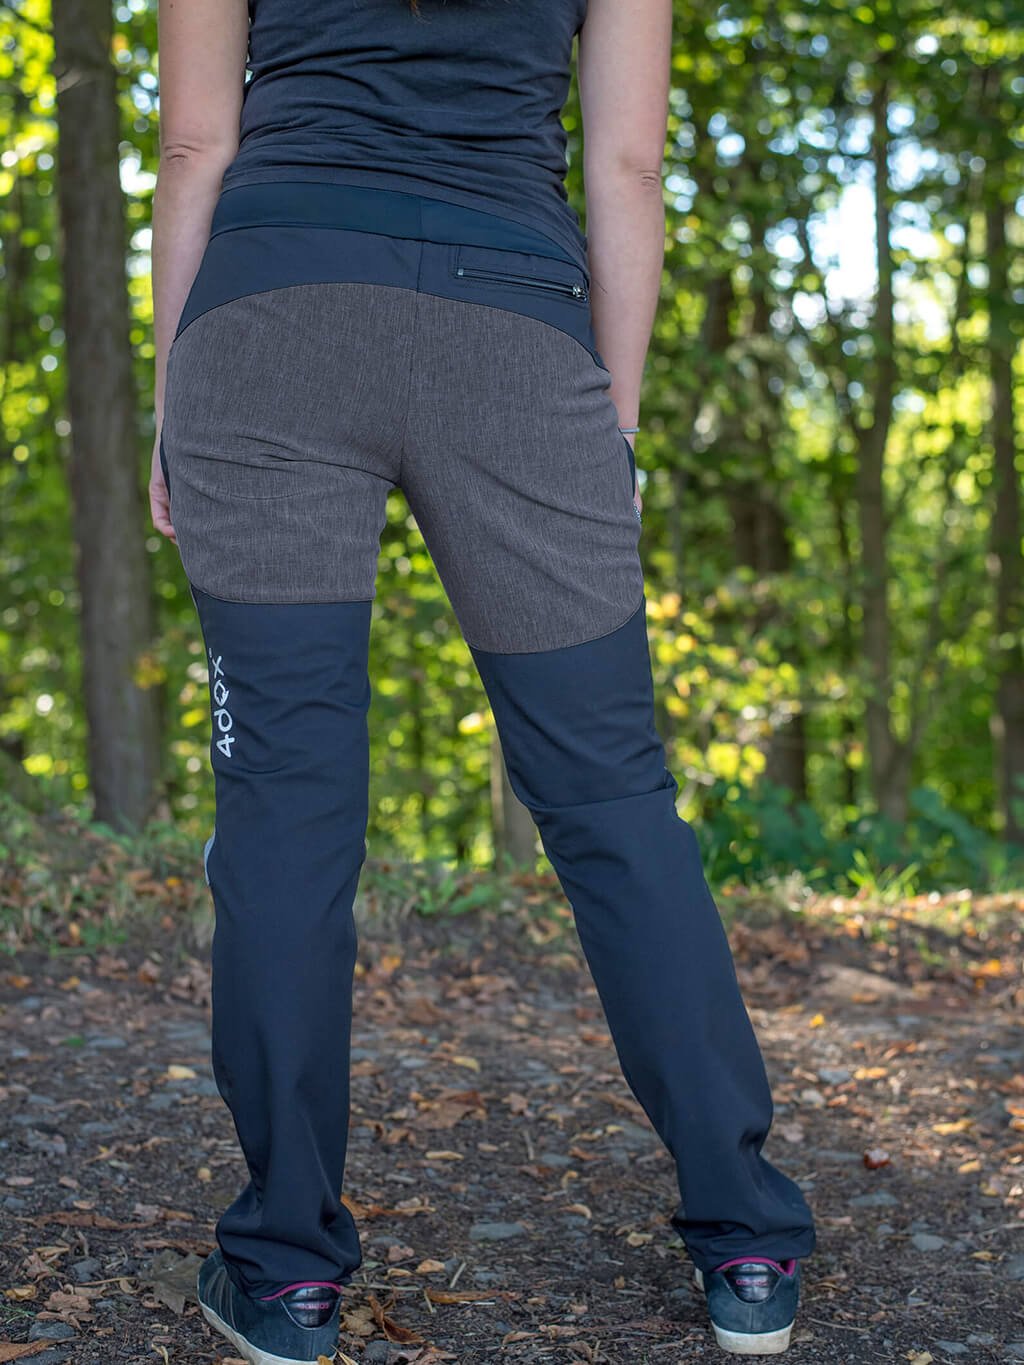 Women's winter training pants - customized